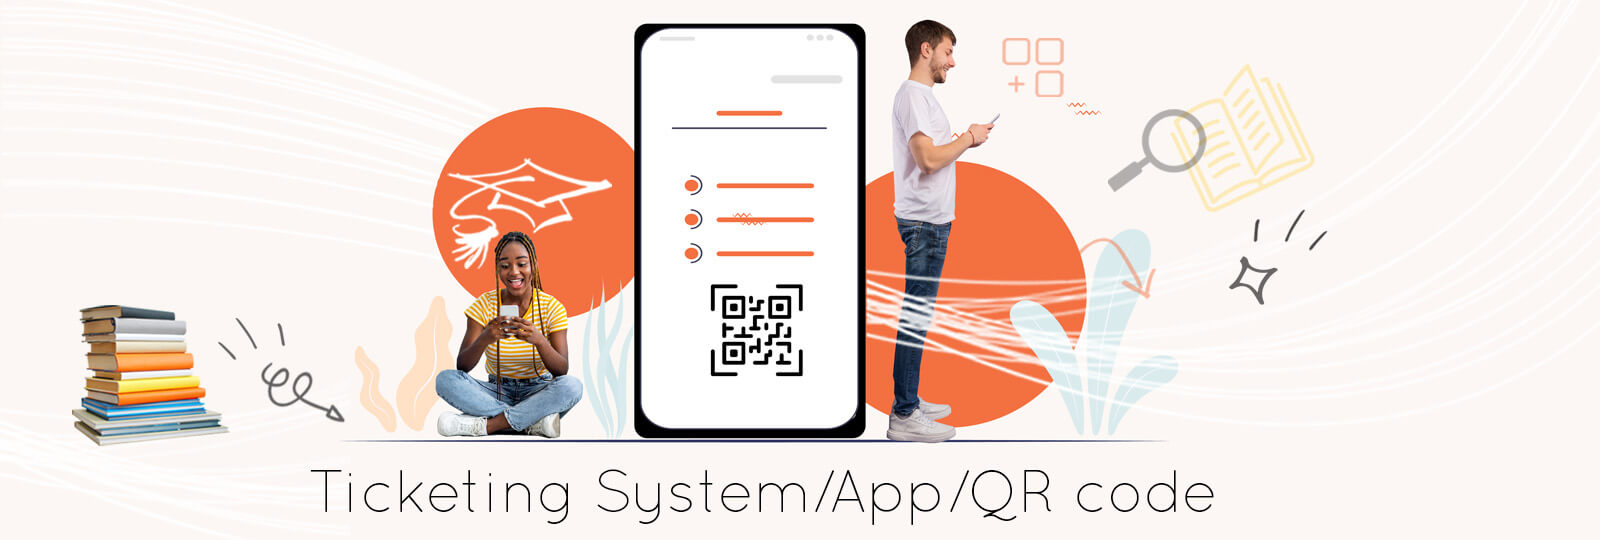 Ticketing System / App / QR Code